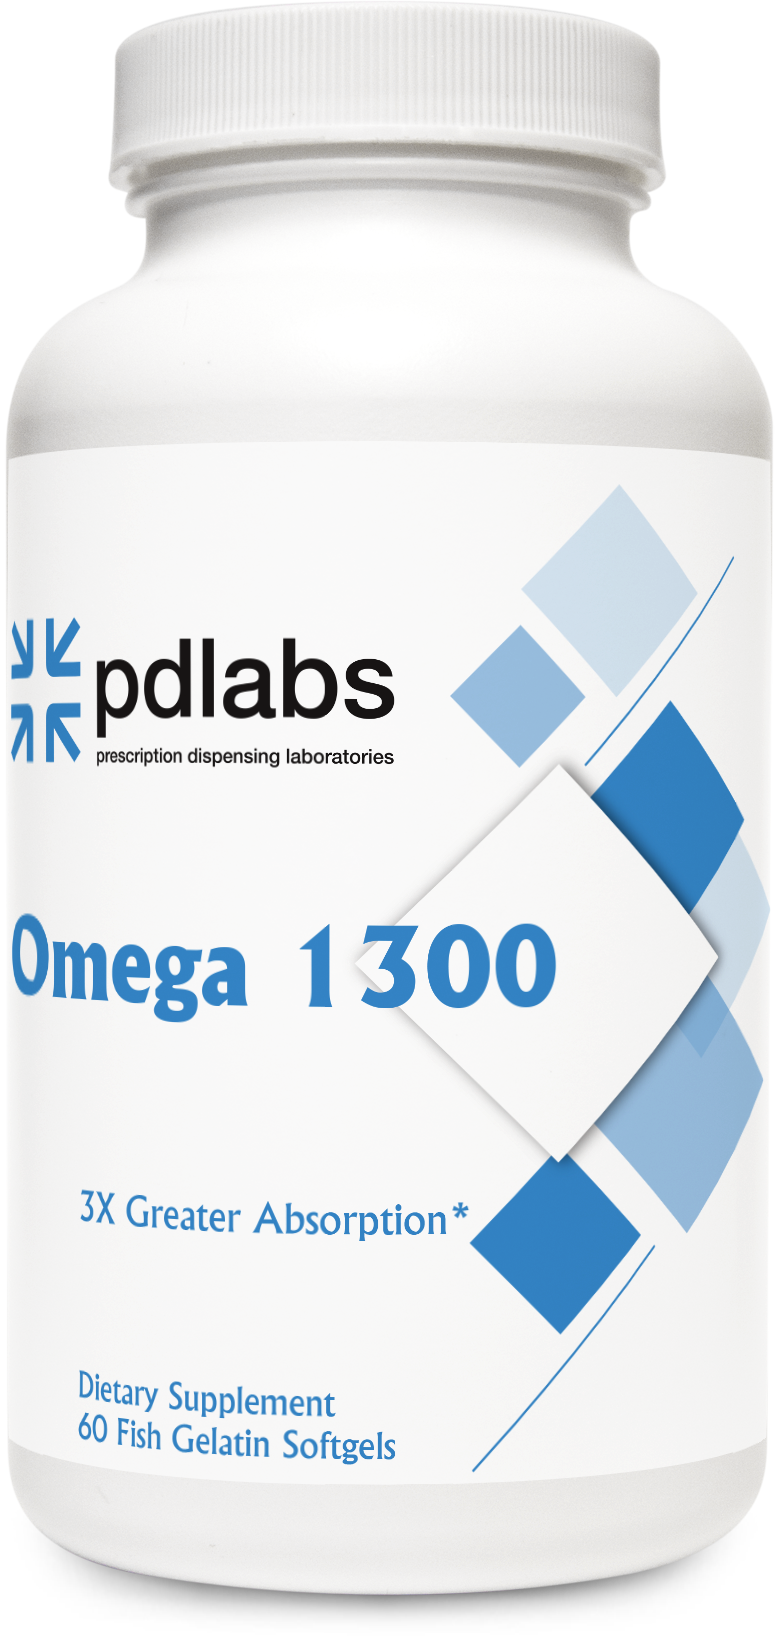 OMEGA1300-PDLabs - LaValle Performance Health